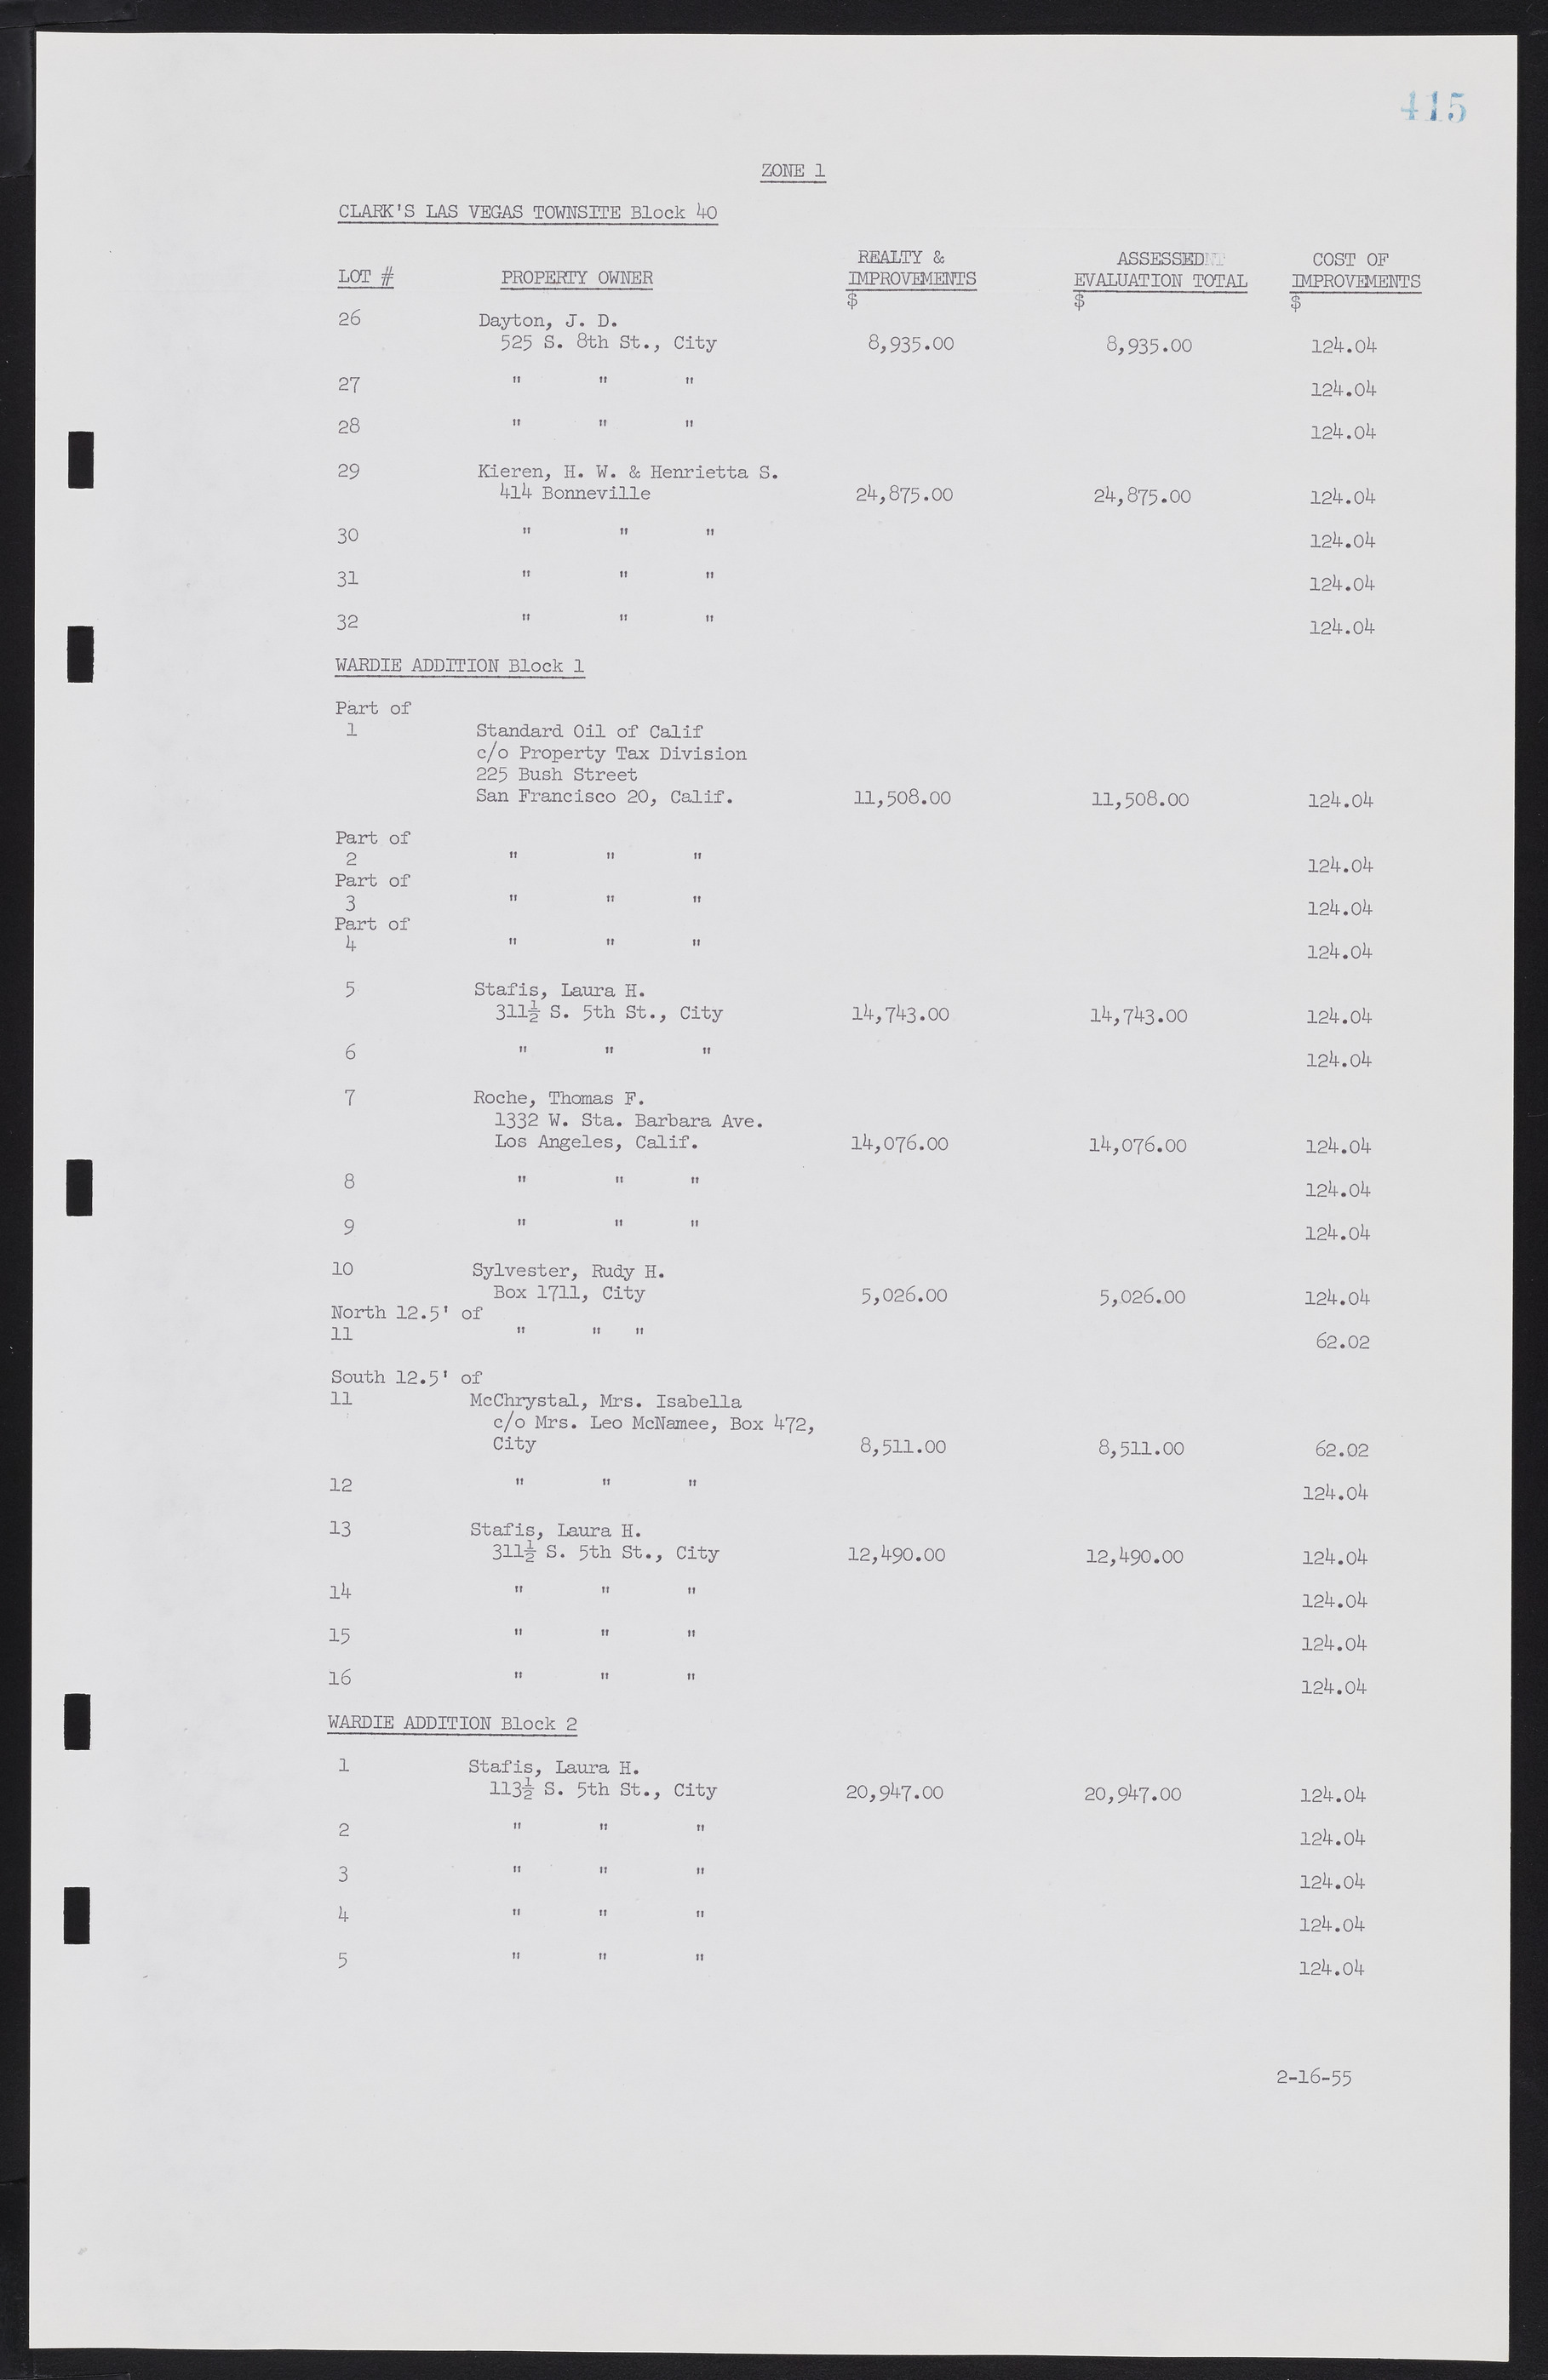 Las Vegas City Commission Minutes, February 17, 1954 to September 21, 1955, lvc000009-421